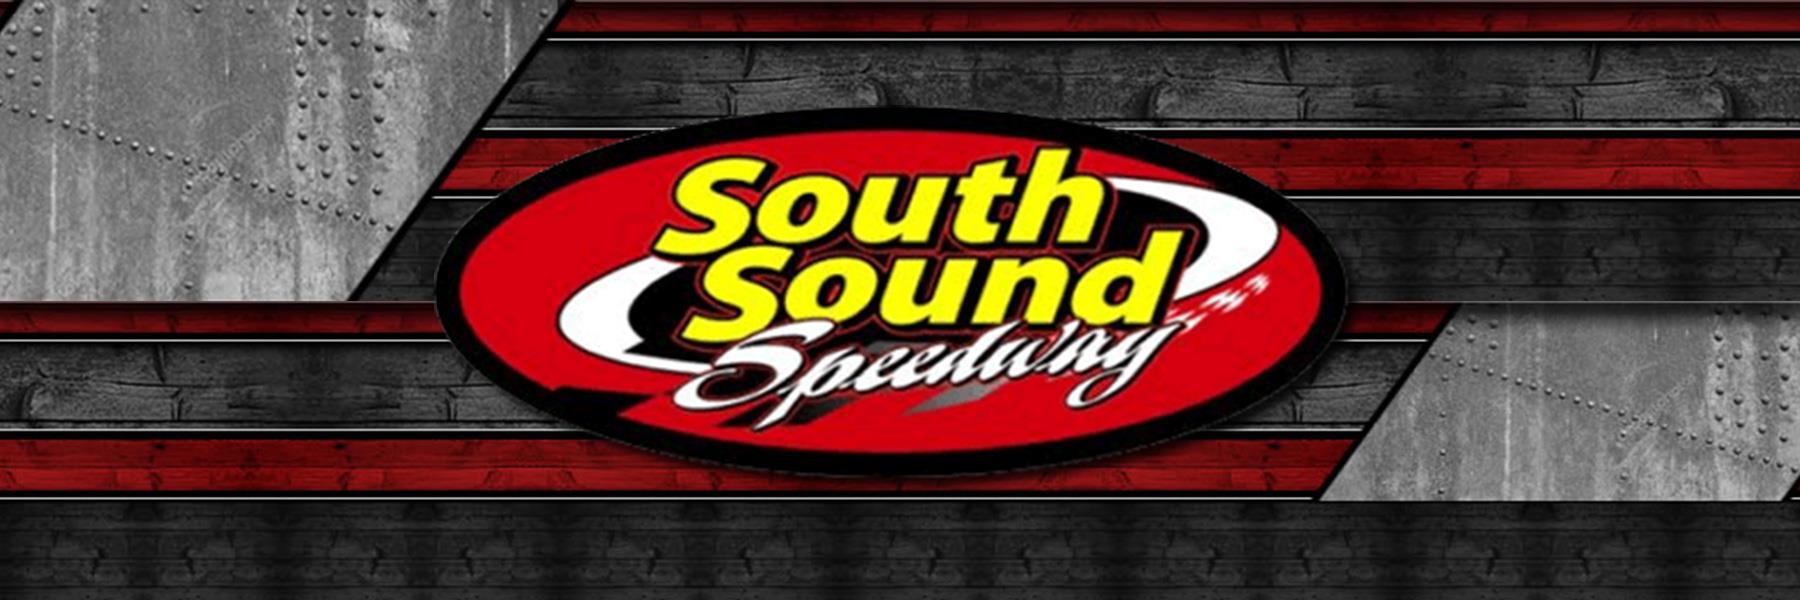 4/3/2021 - South Sound Speedway